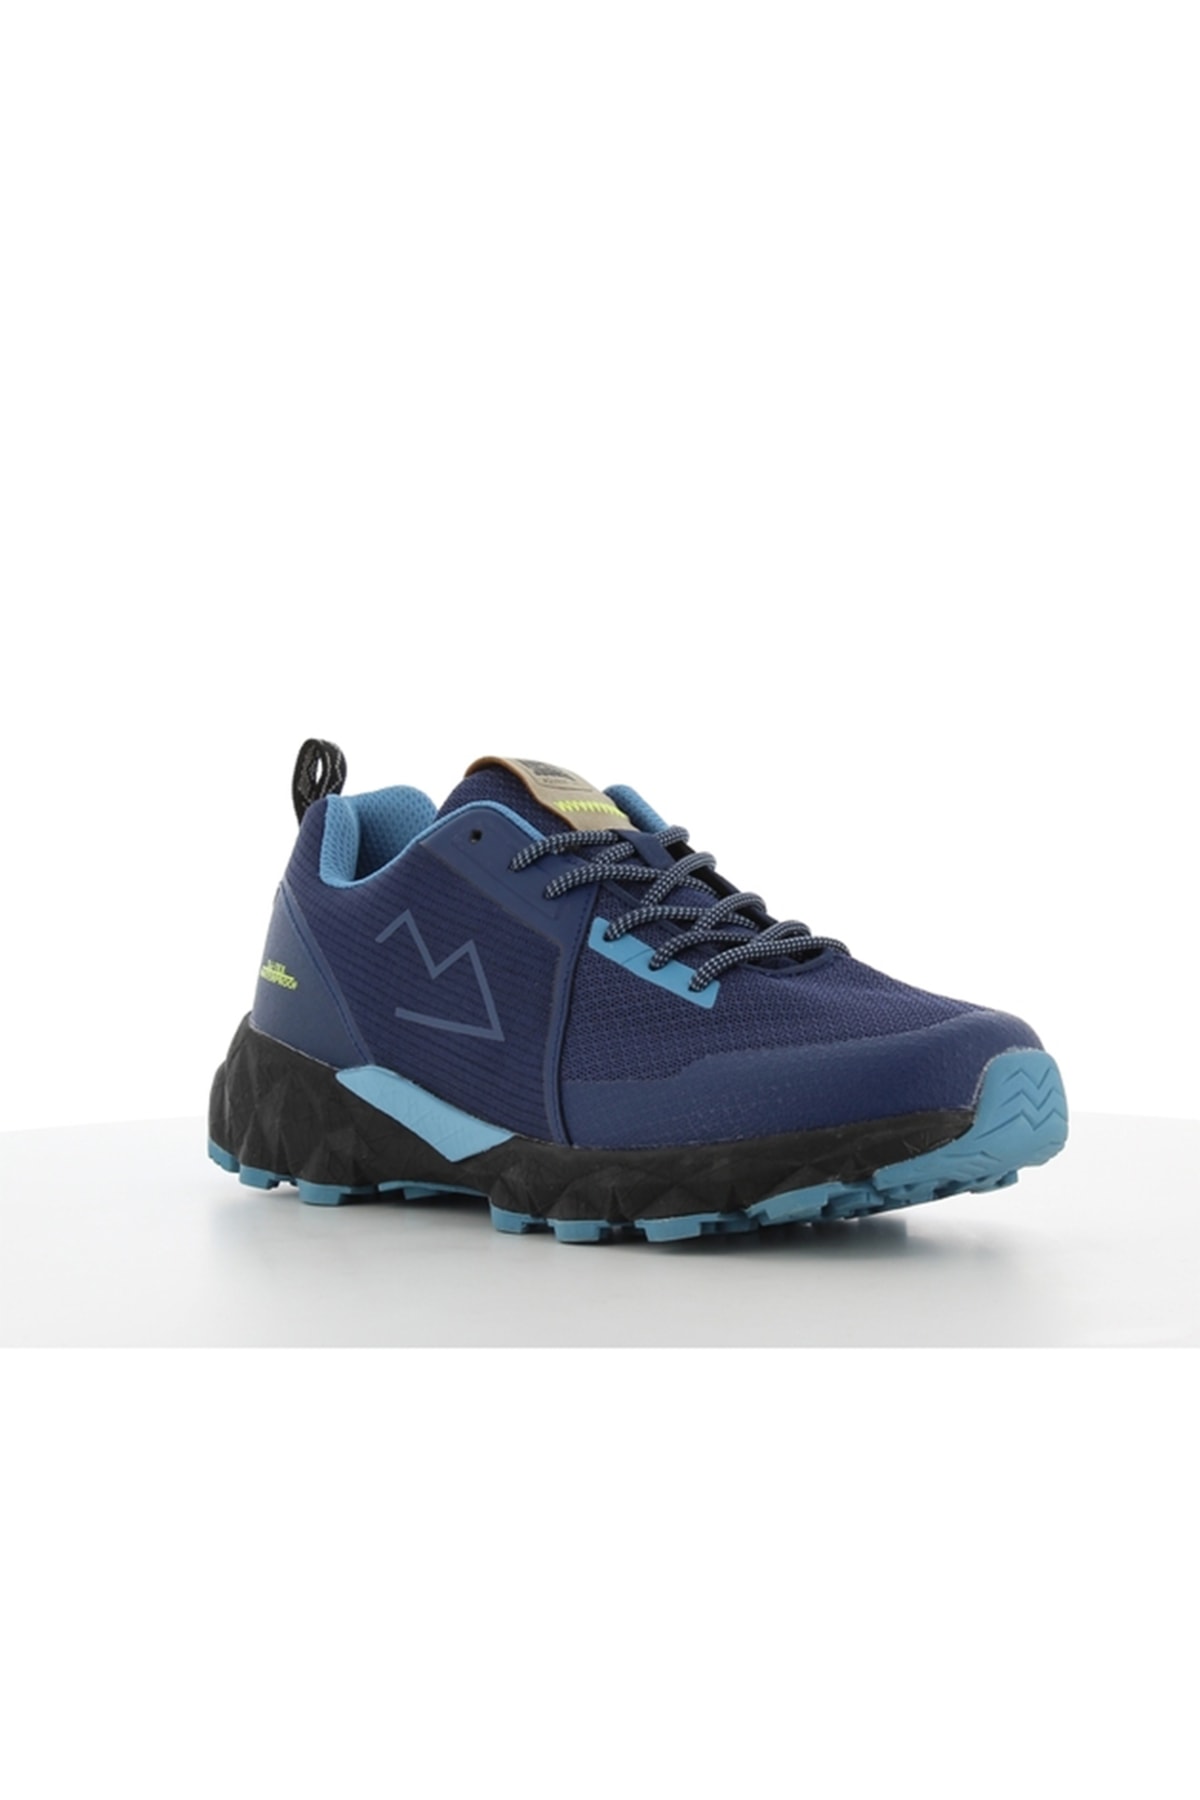 Safety jogger Mavi Outdoor Trekking Ayakkabısı